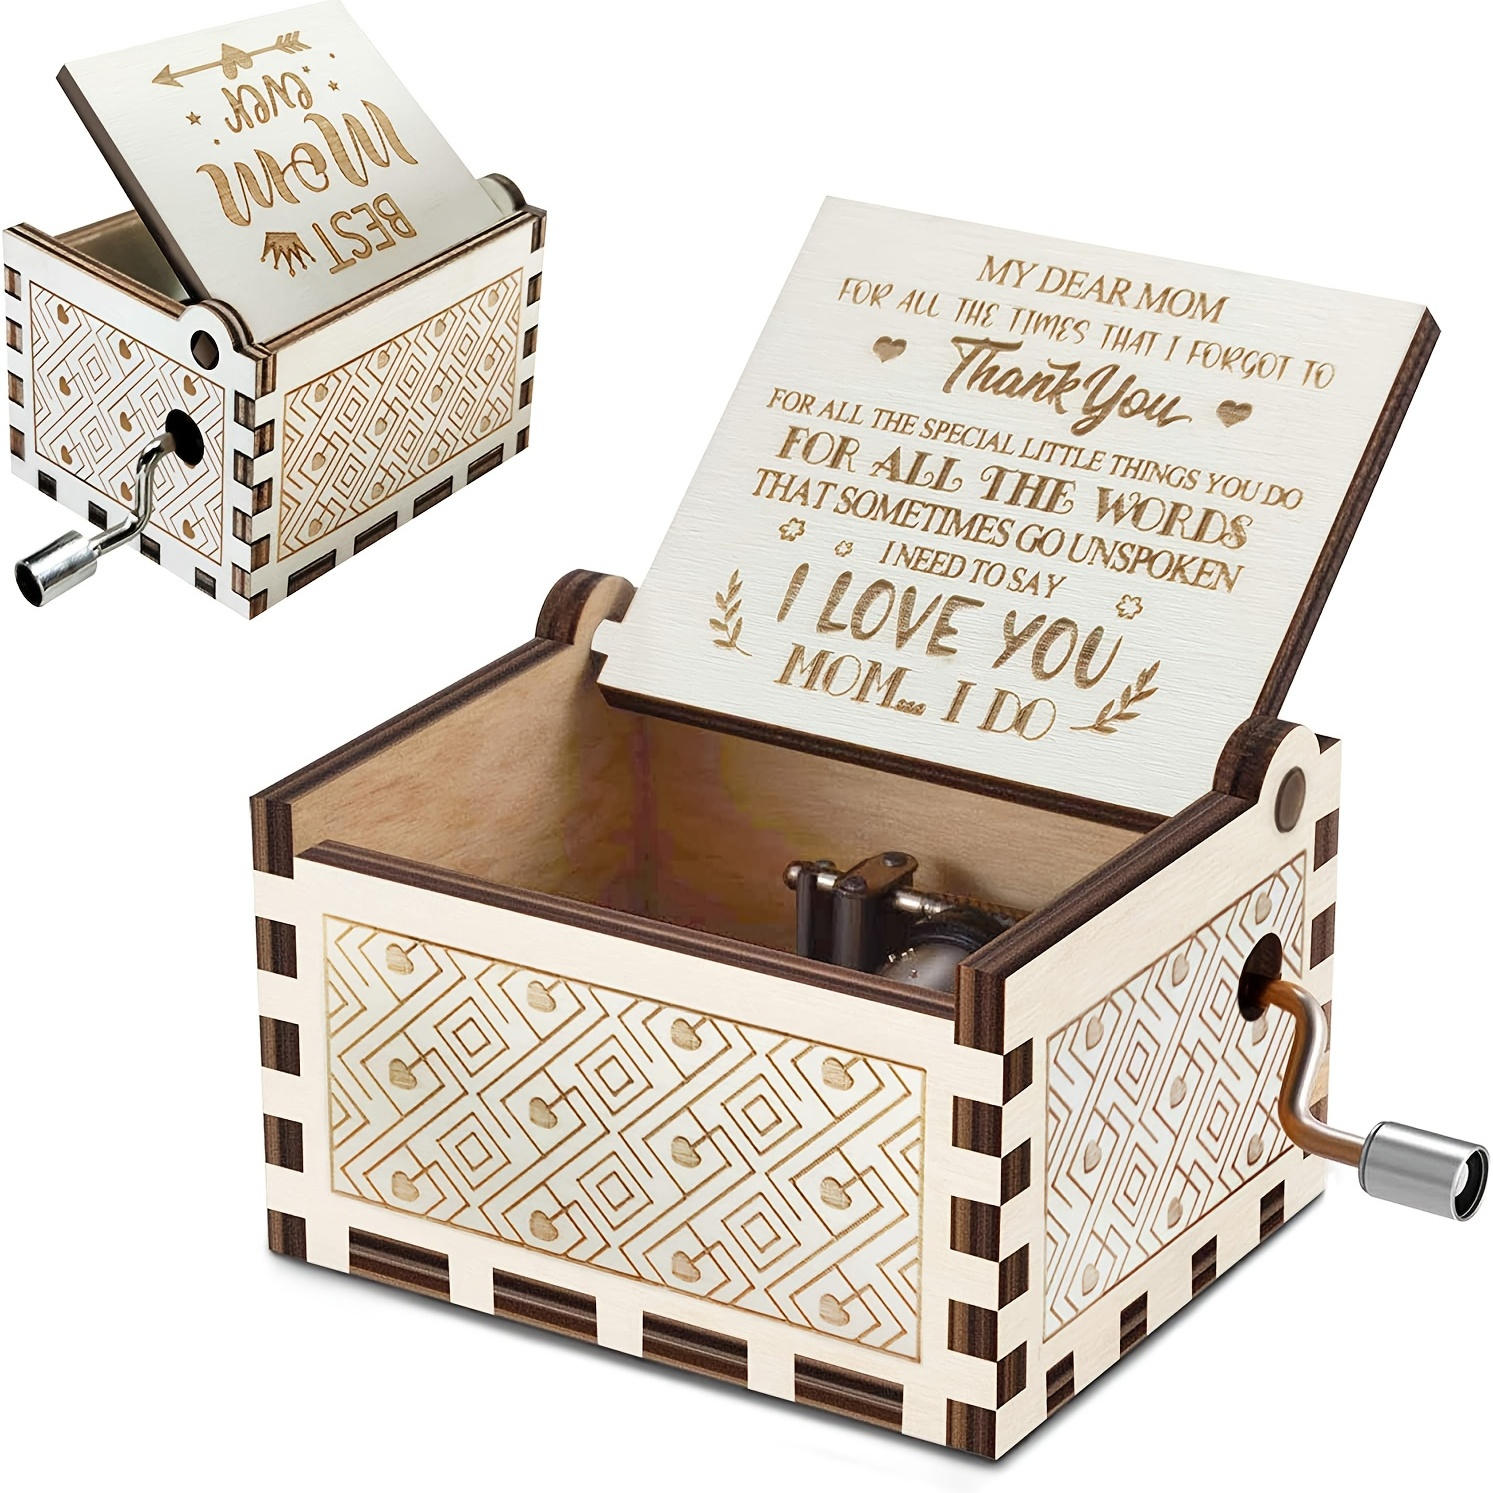 Caja de música de madera personalizada, imagen impresa, texto, logotipo,  caja musical personalizada de arranque a mano, regalo para hija, mamá